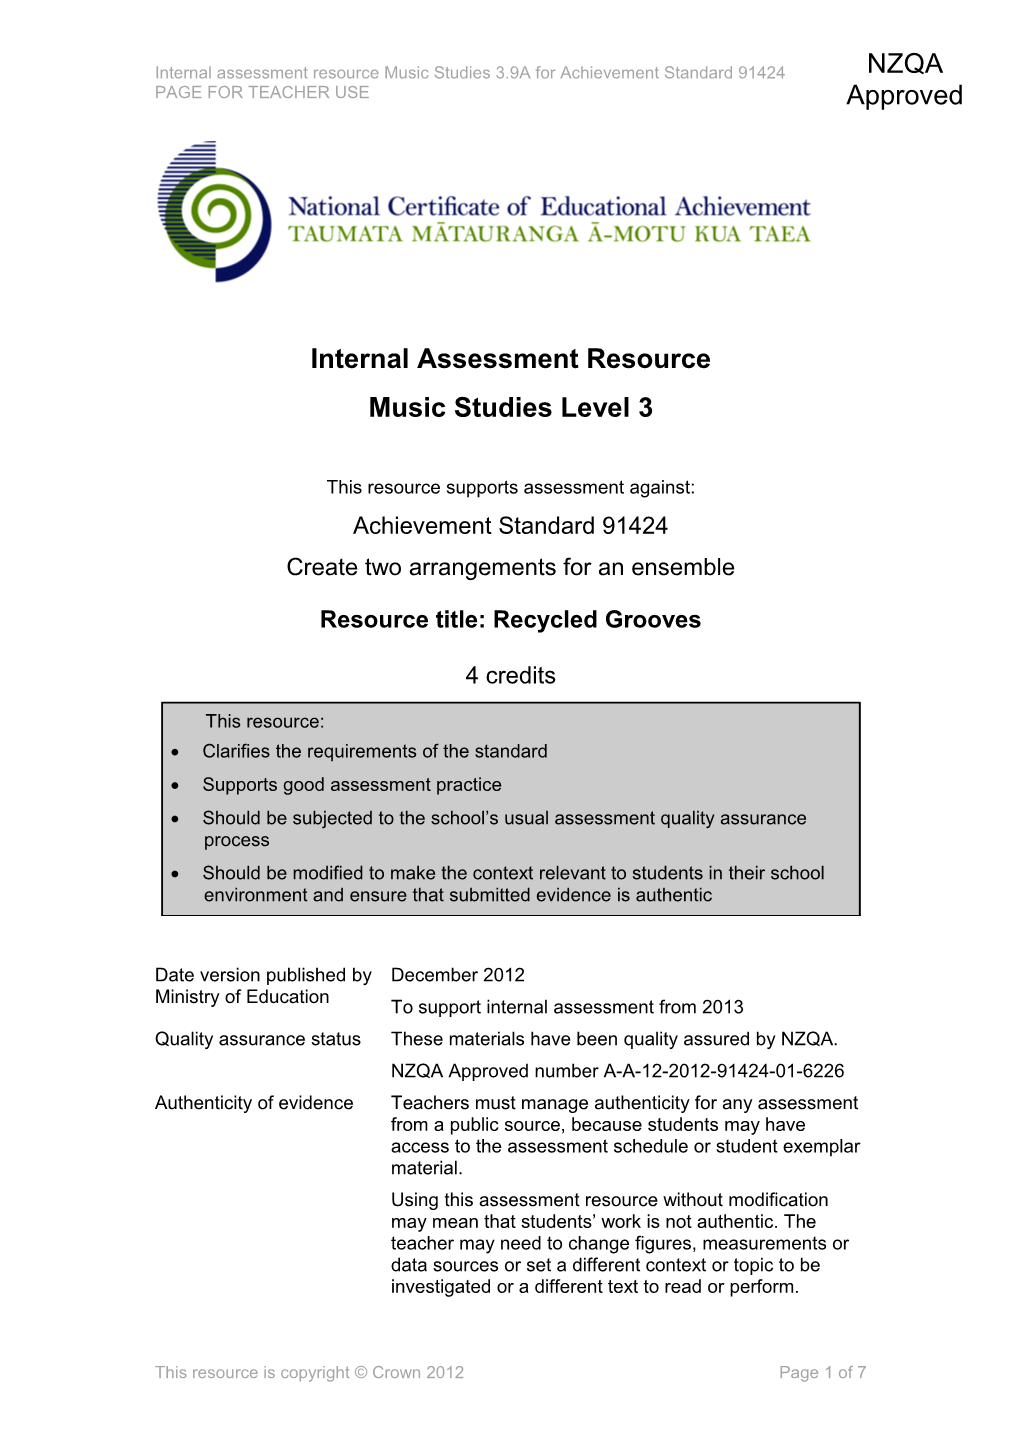 Level 3 Music Studies Internal Assessment Resources